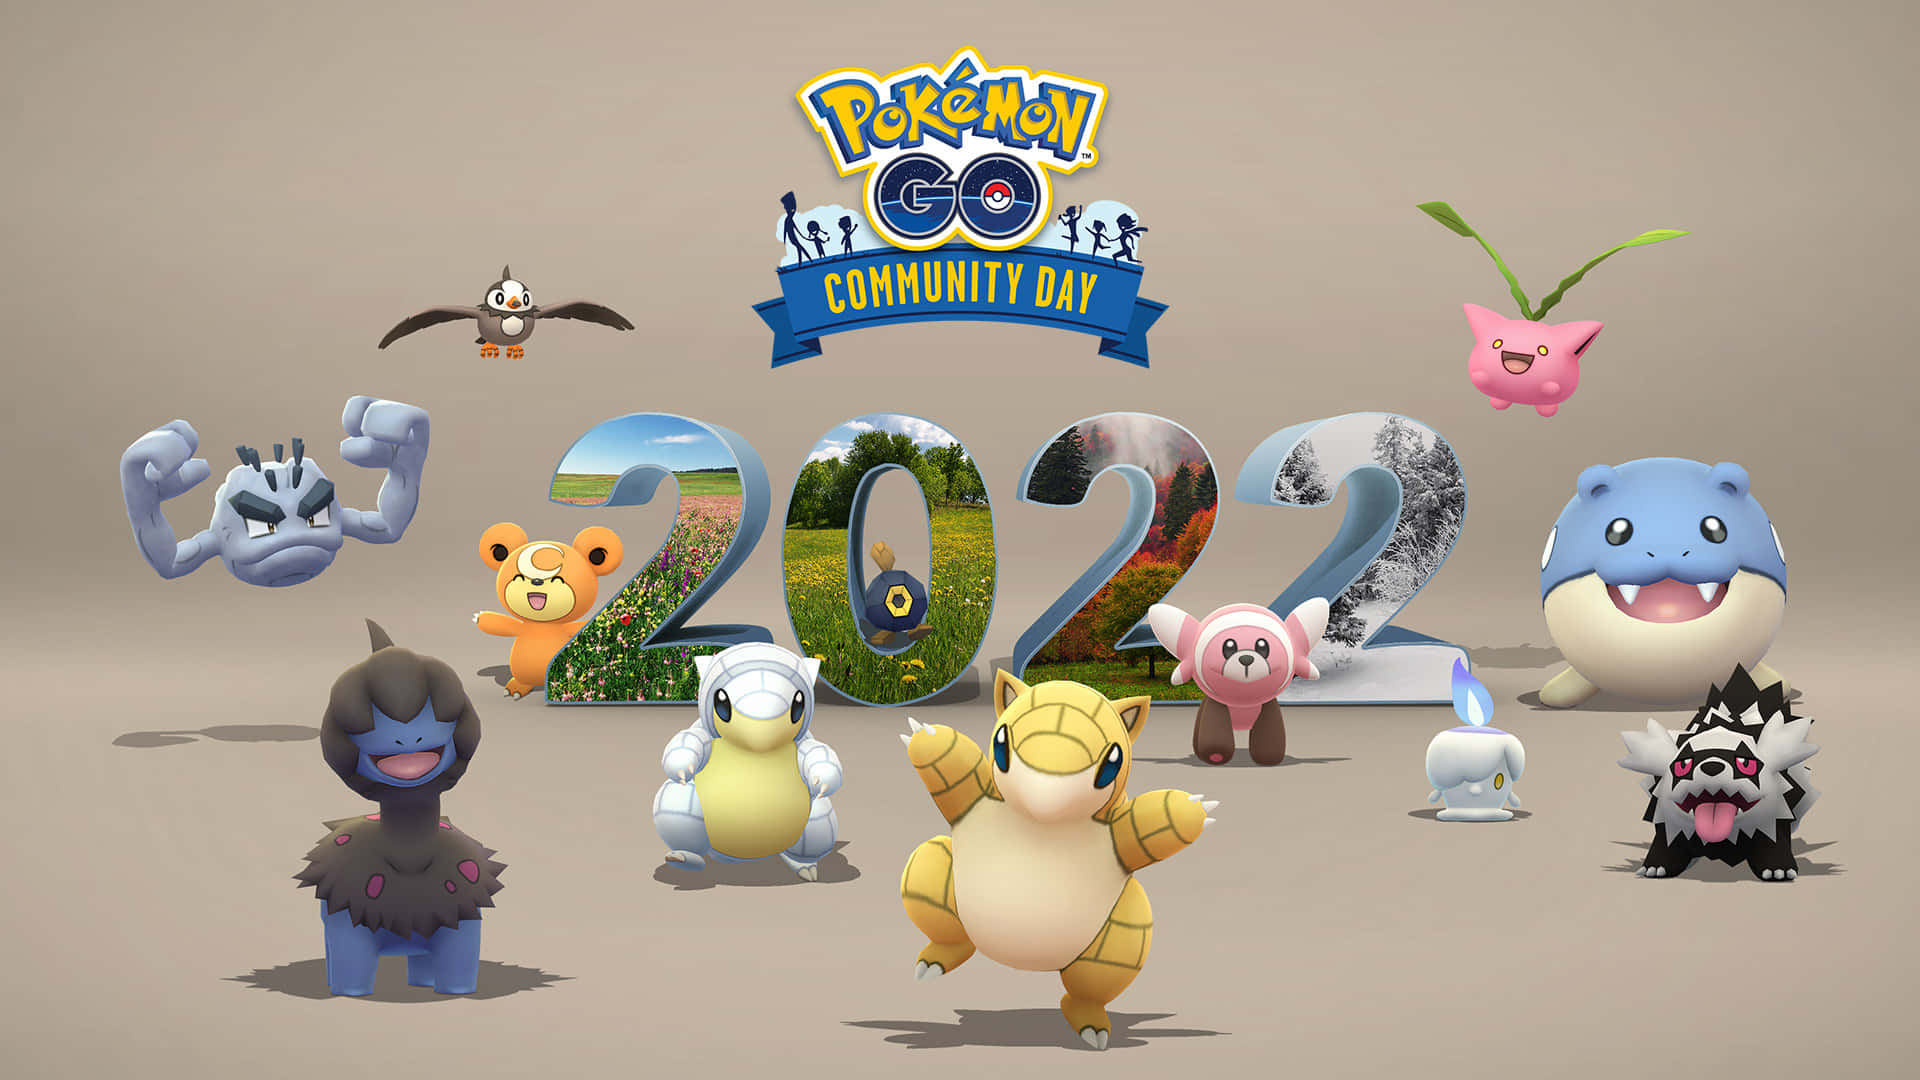 Deino2022 Pokemon Go = Deino 2022 Pokemon Go (this Sentence Does Not Need To Be Translated As It Is Already In English) Fondo de pantalla